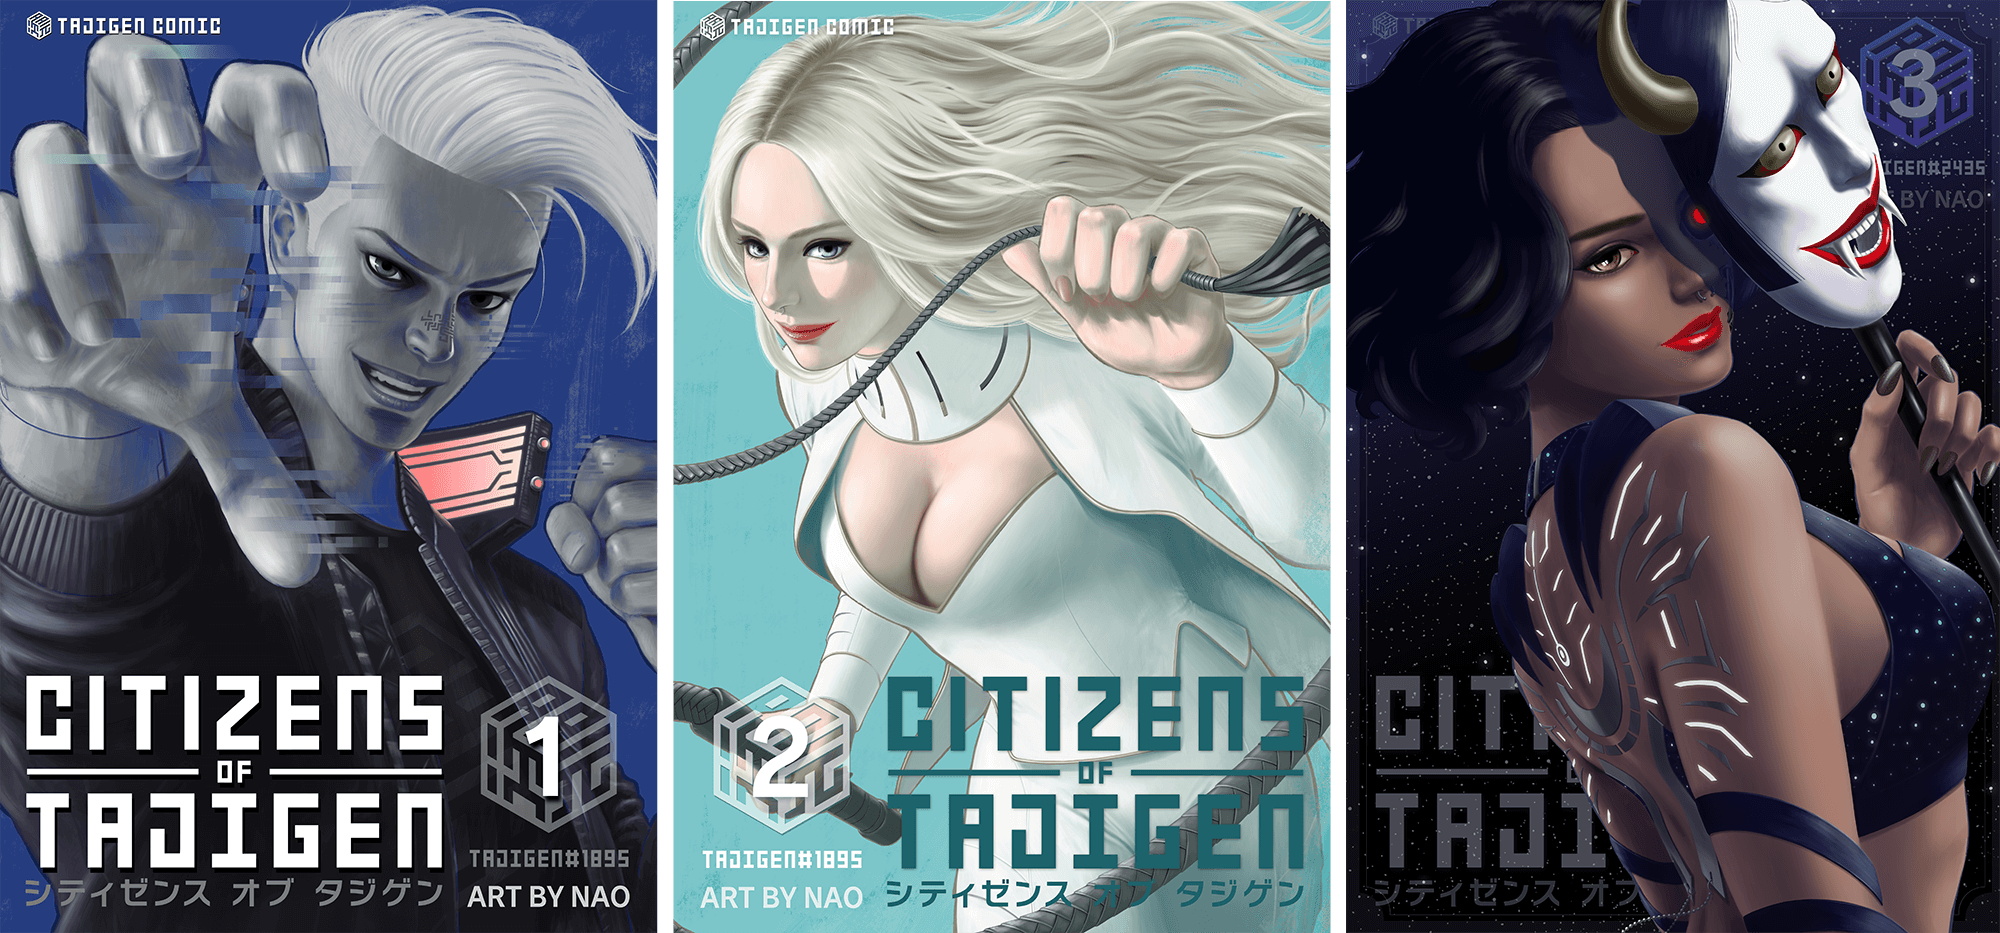 The Citizens of Tajigen : Art claim manga cover series